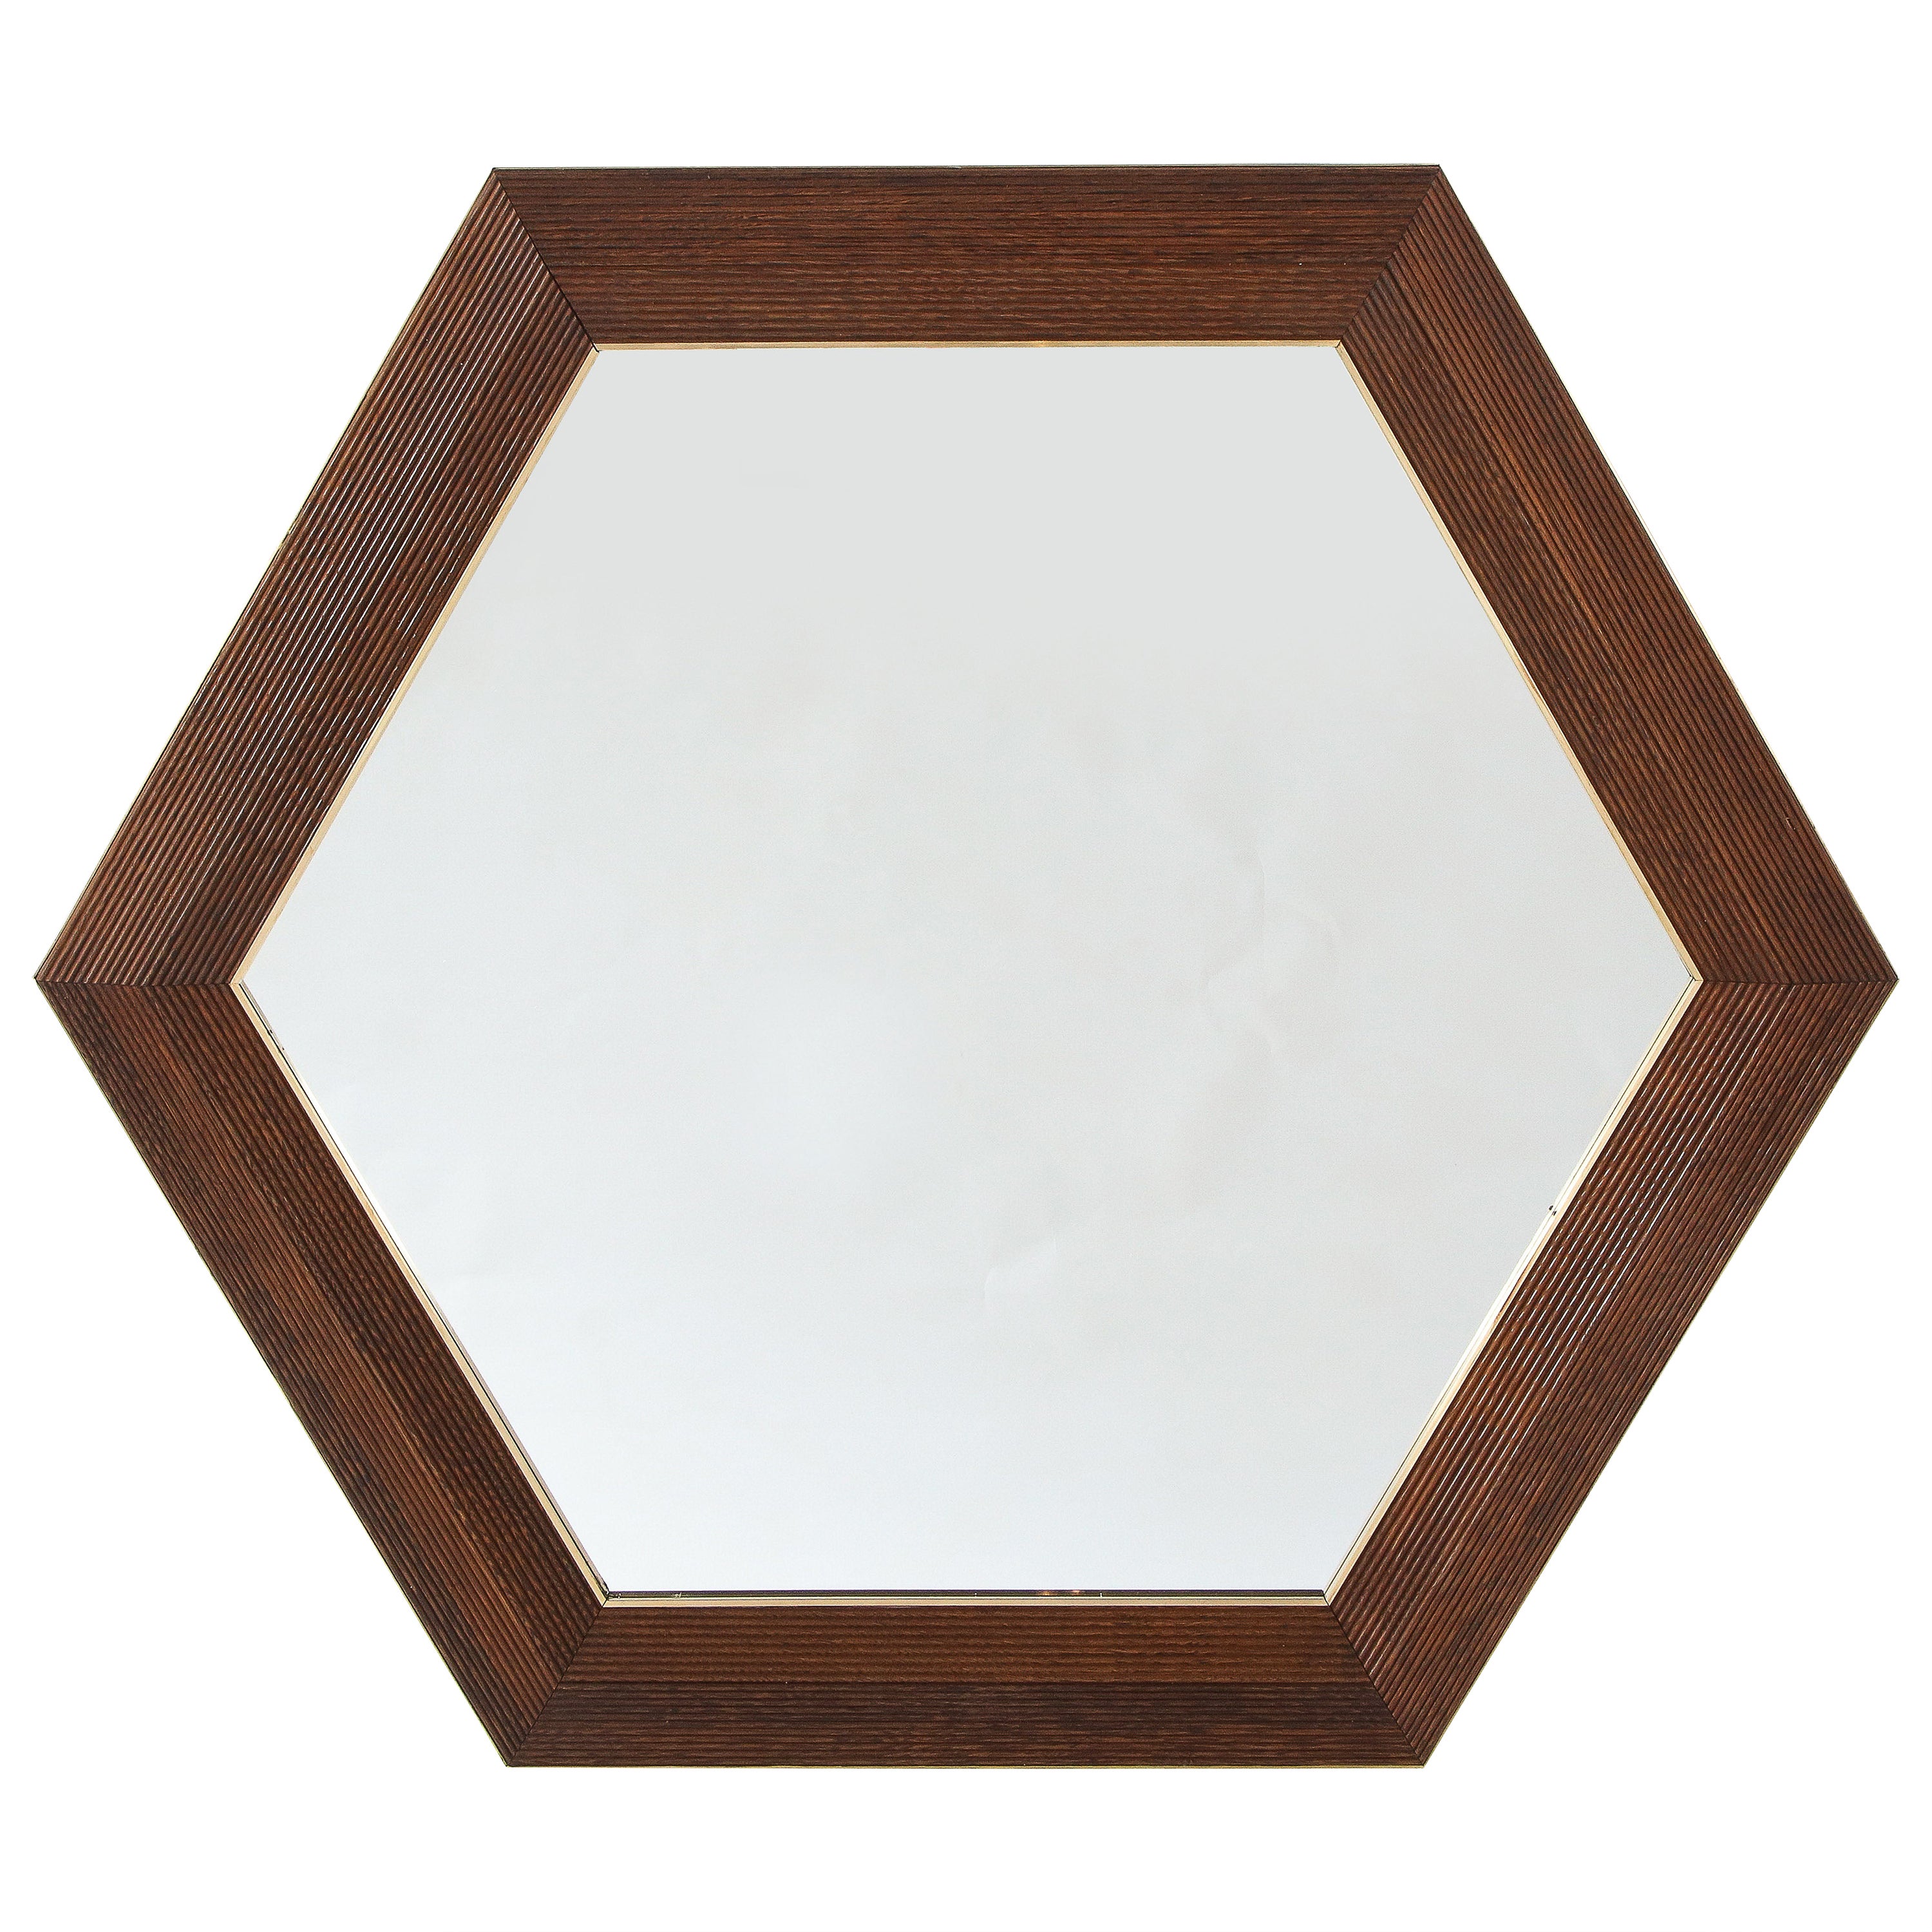 Walnut and Brass Hexagonal Wall Mirror